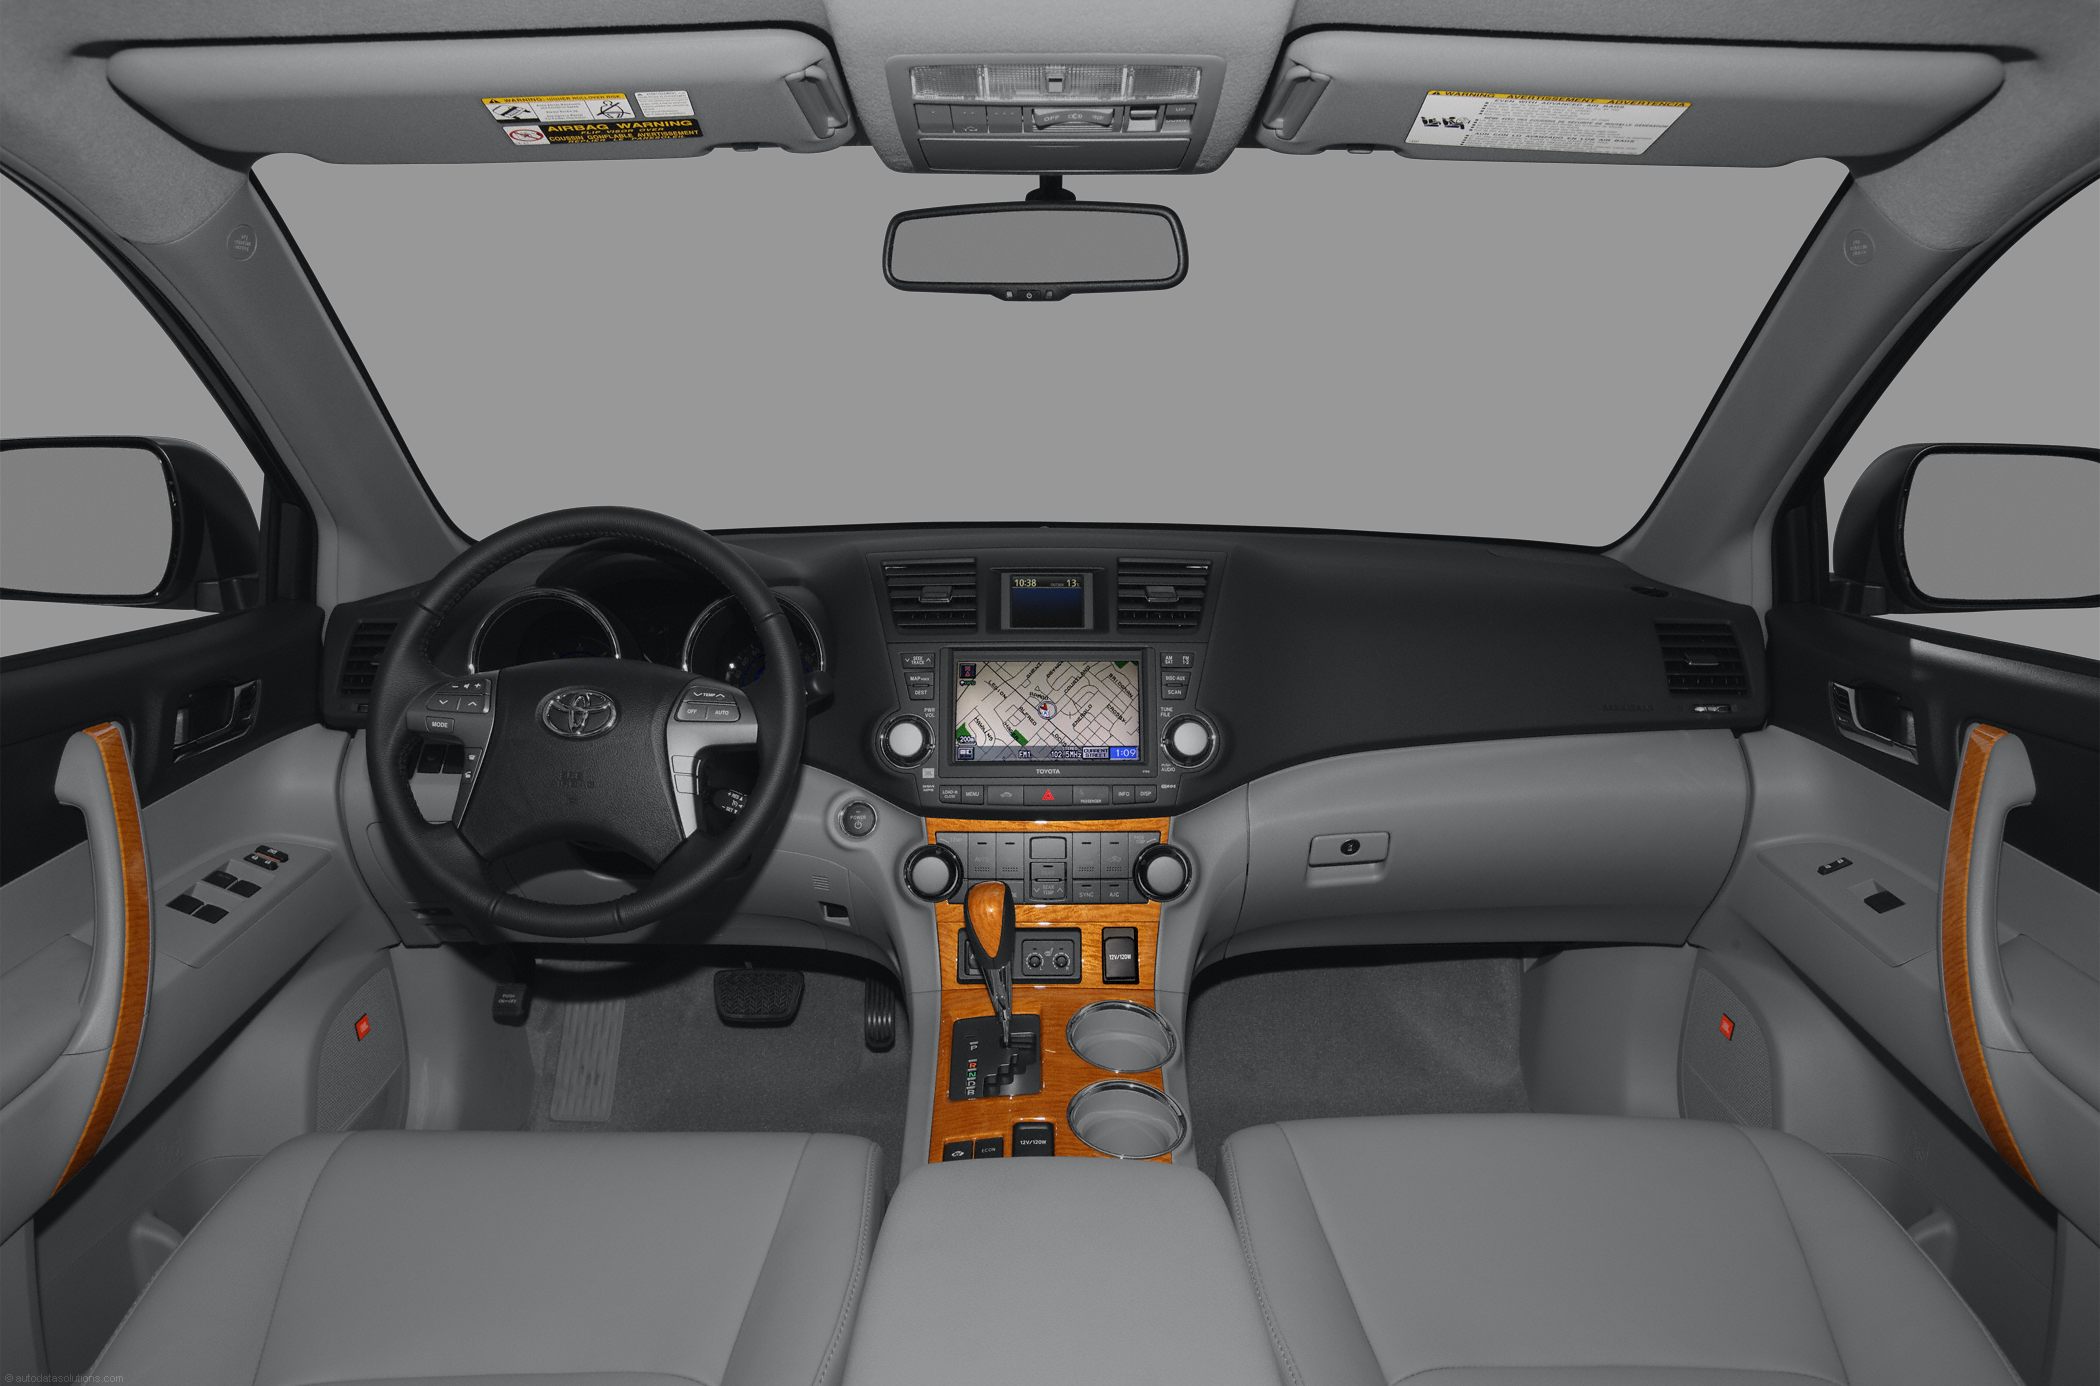 2010 toyota highlander interior dimensions